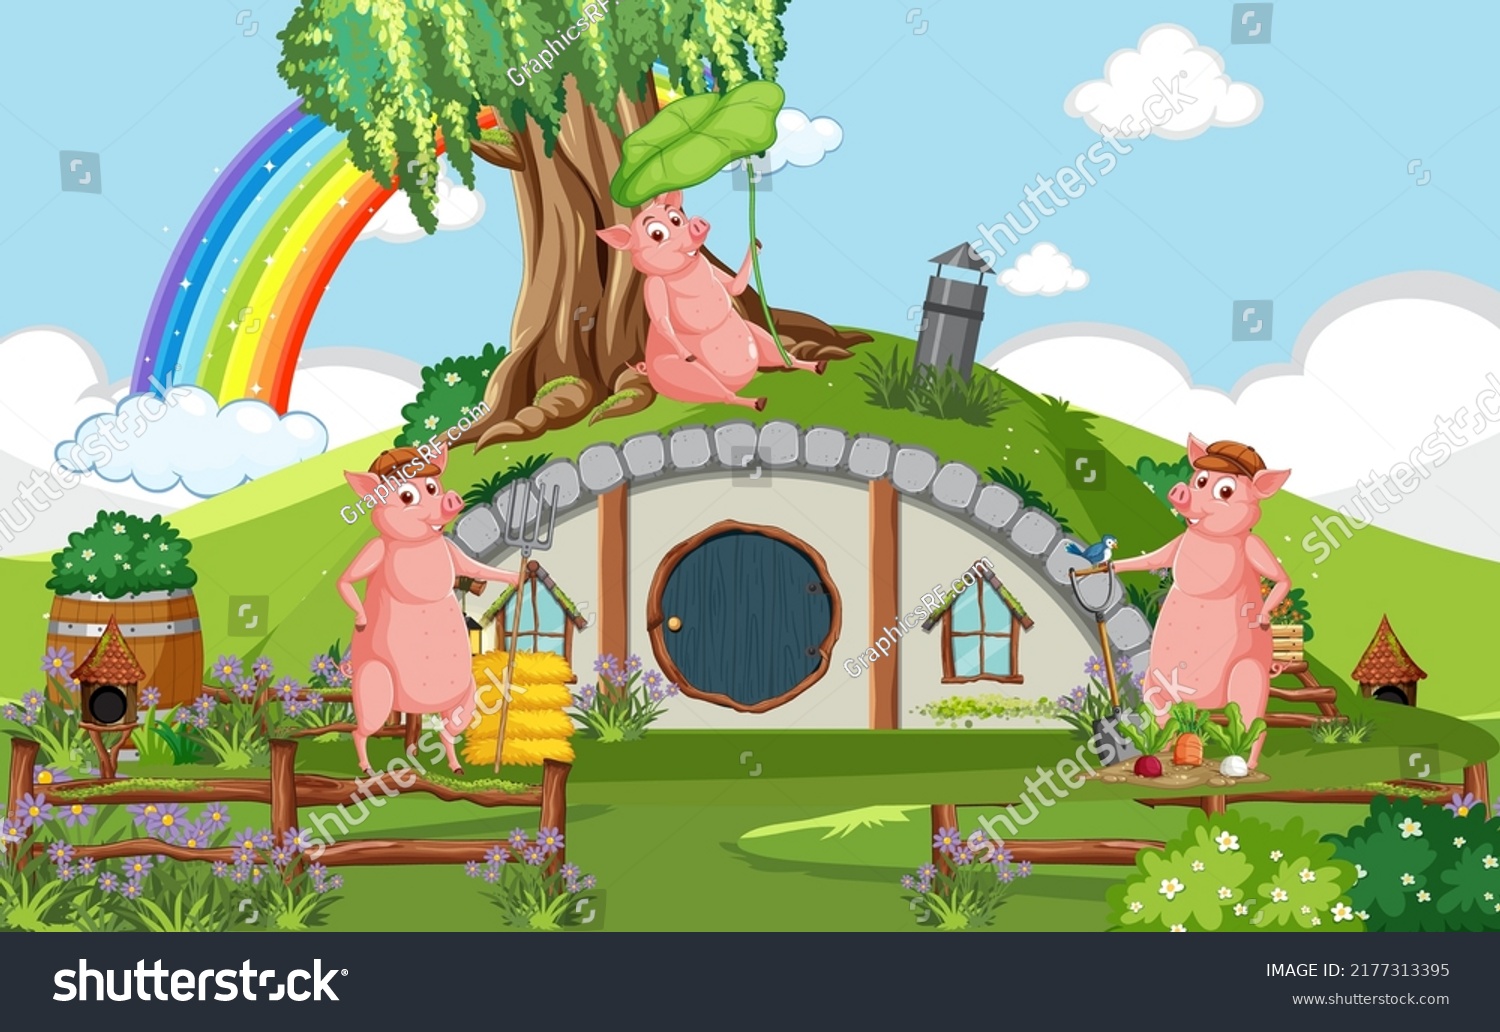 SVG of Hobbit house with pig family illustration svg